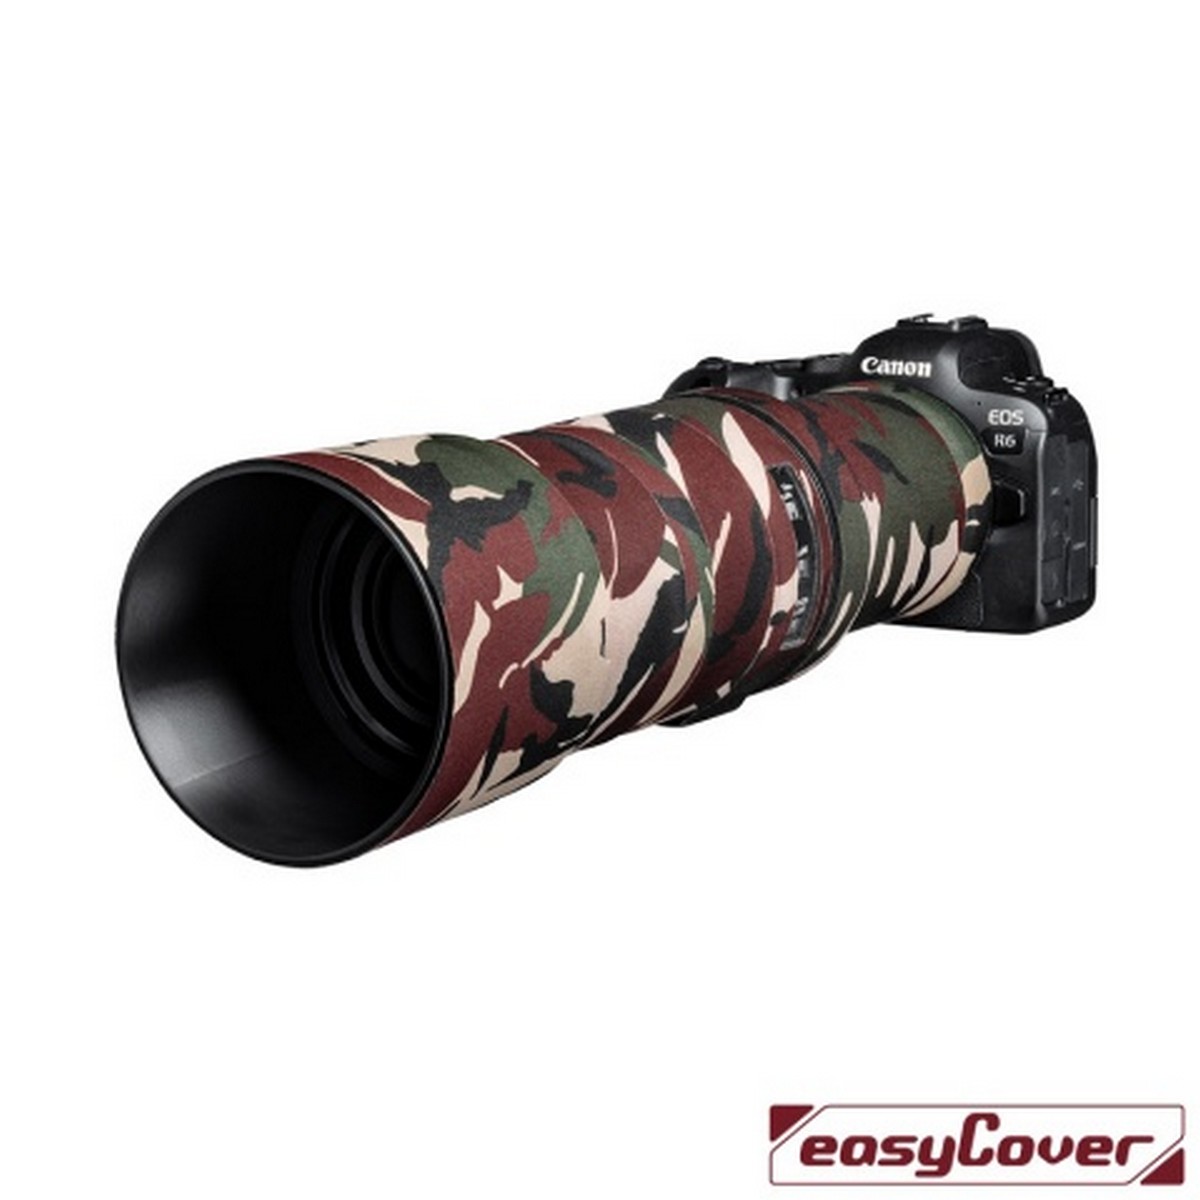 Easycover Lens Oak Objektivschutz für Canon RF 600 mm 1:11 IS STM Grün Camouflage